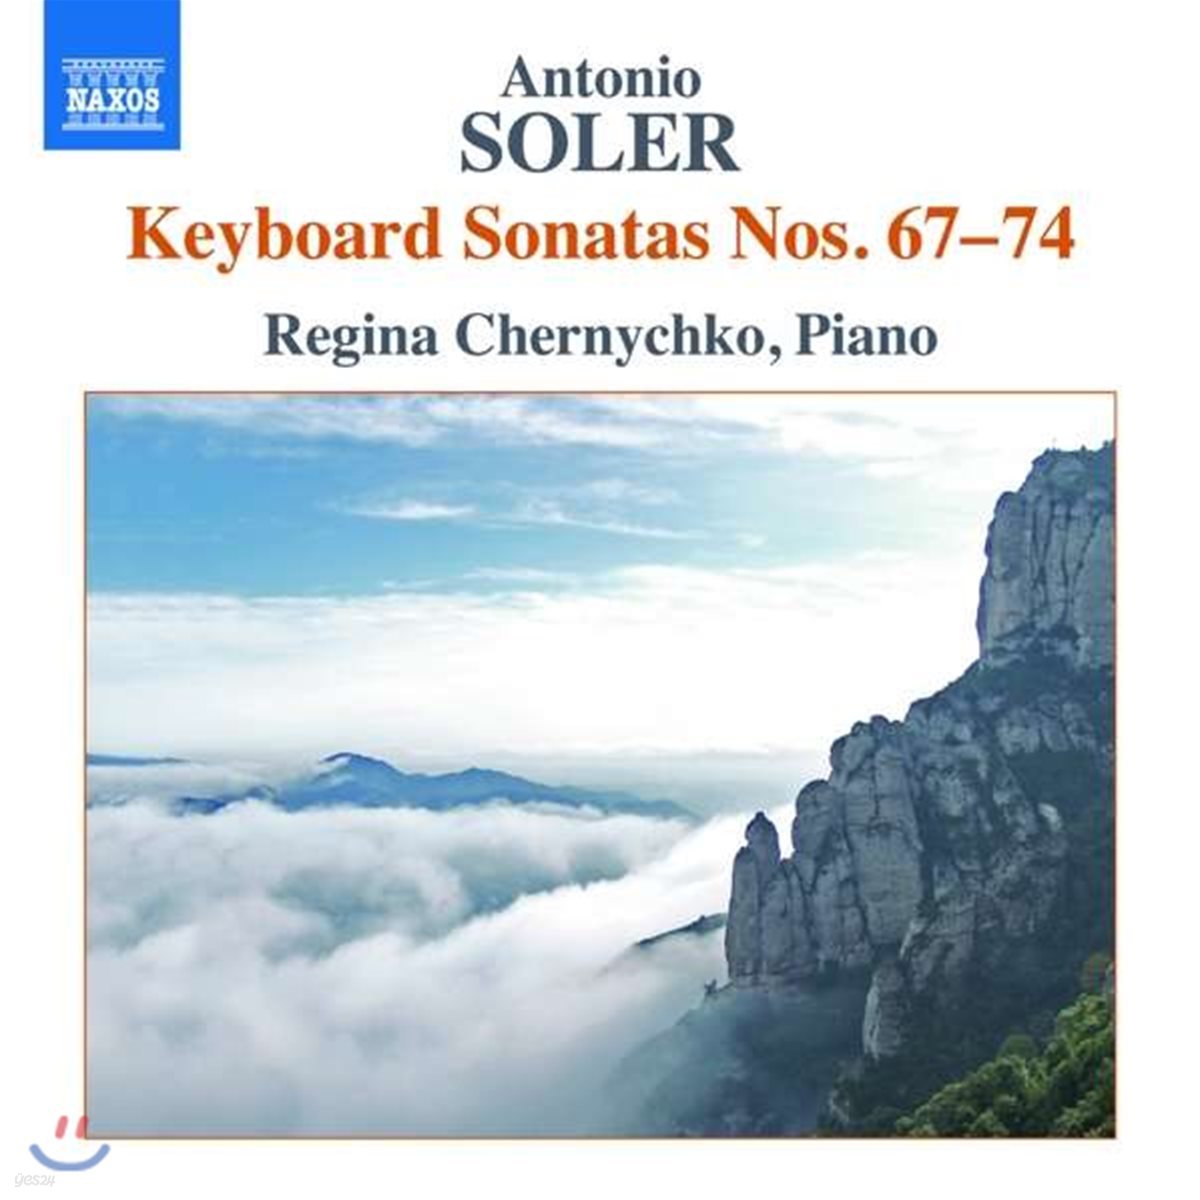 Regina Chernychko 안토니오 솔레르: 건반 소나타 67-74번 - 레지나 체르니치코 (Antonio Soler: Keyboard Sonatas Nos.67-74)